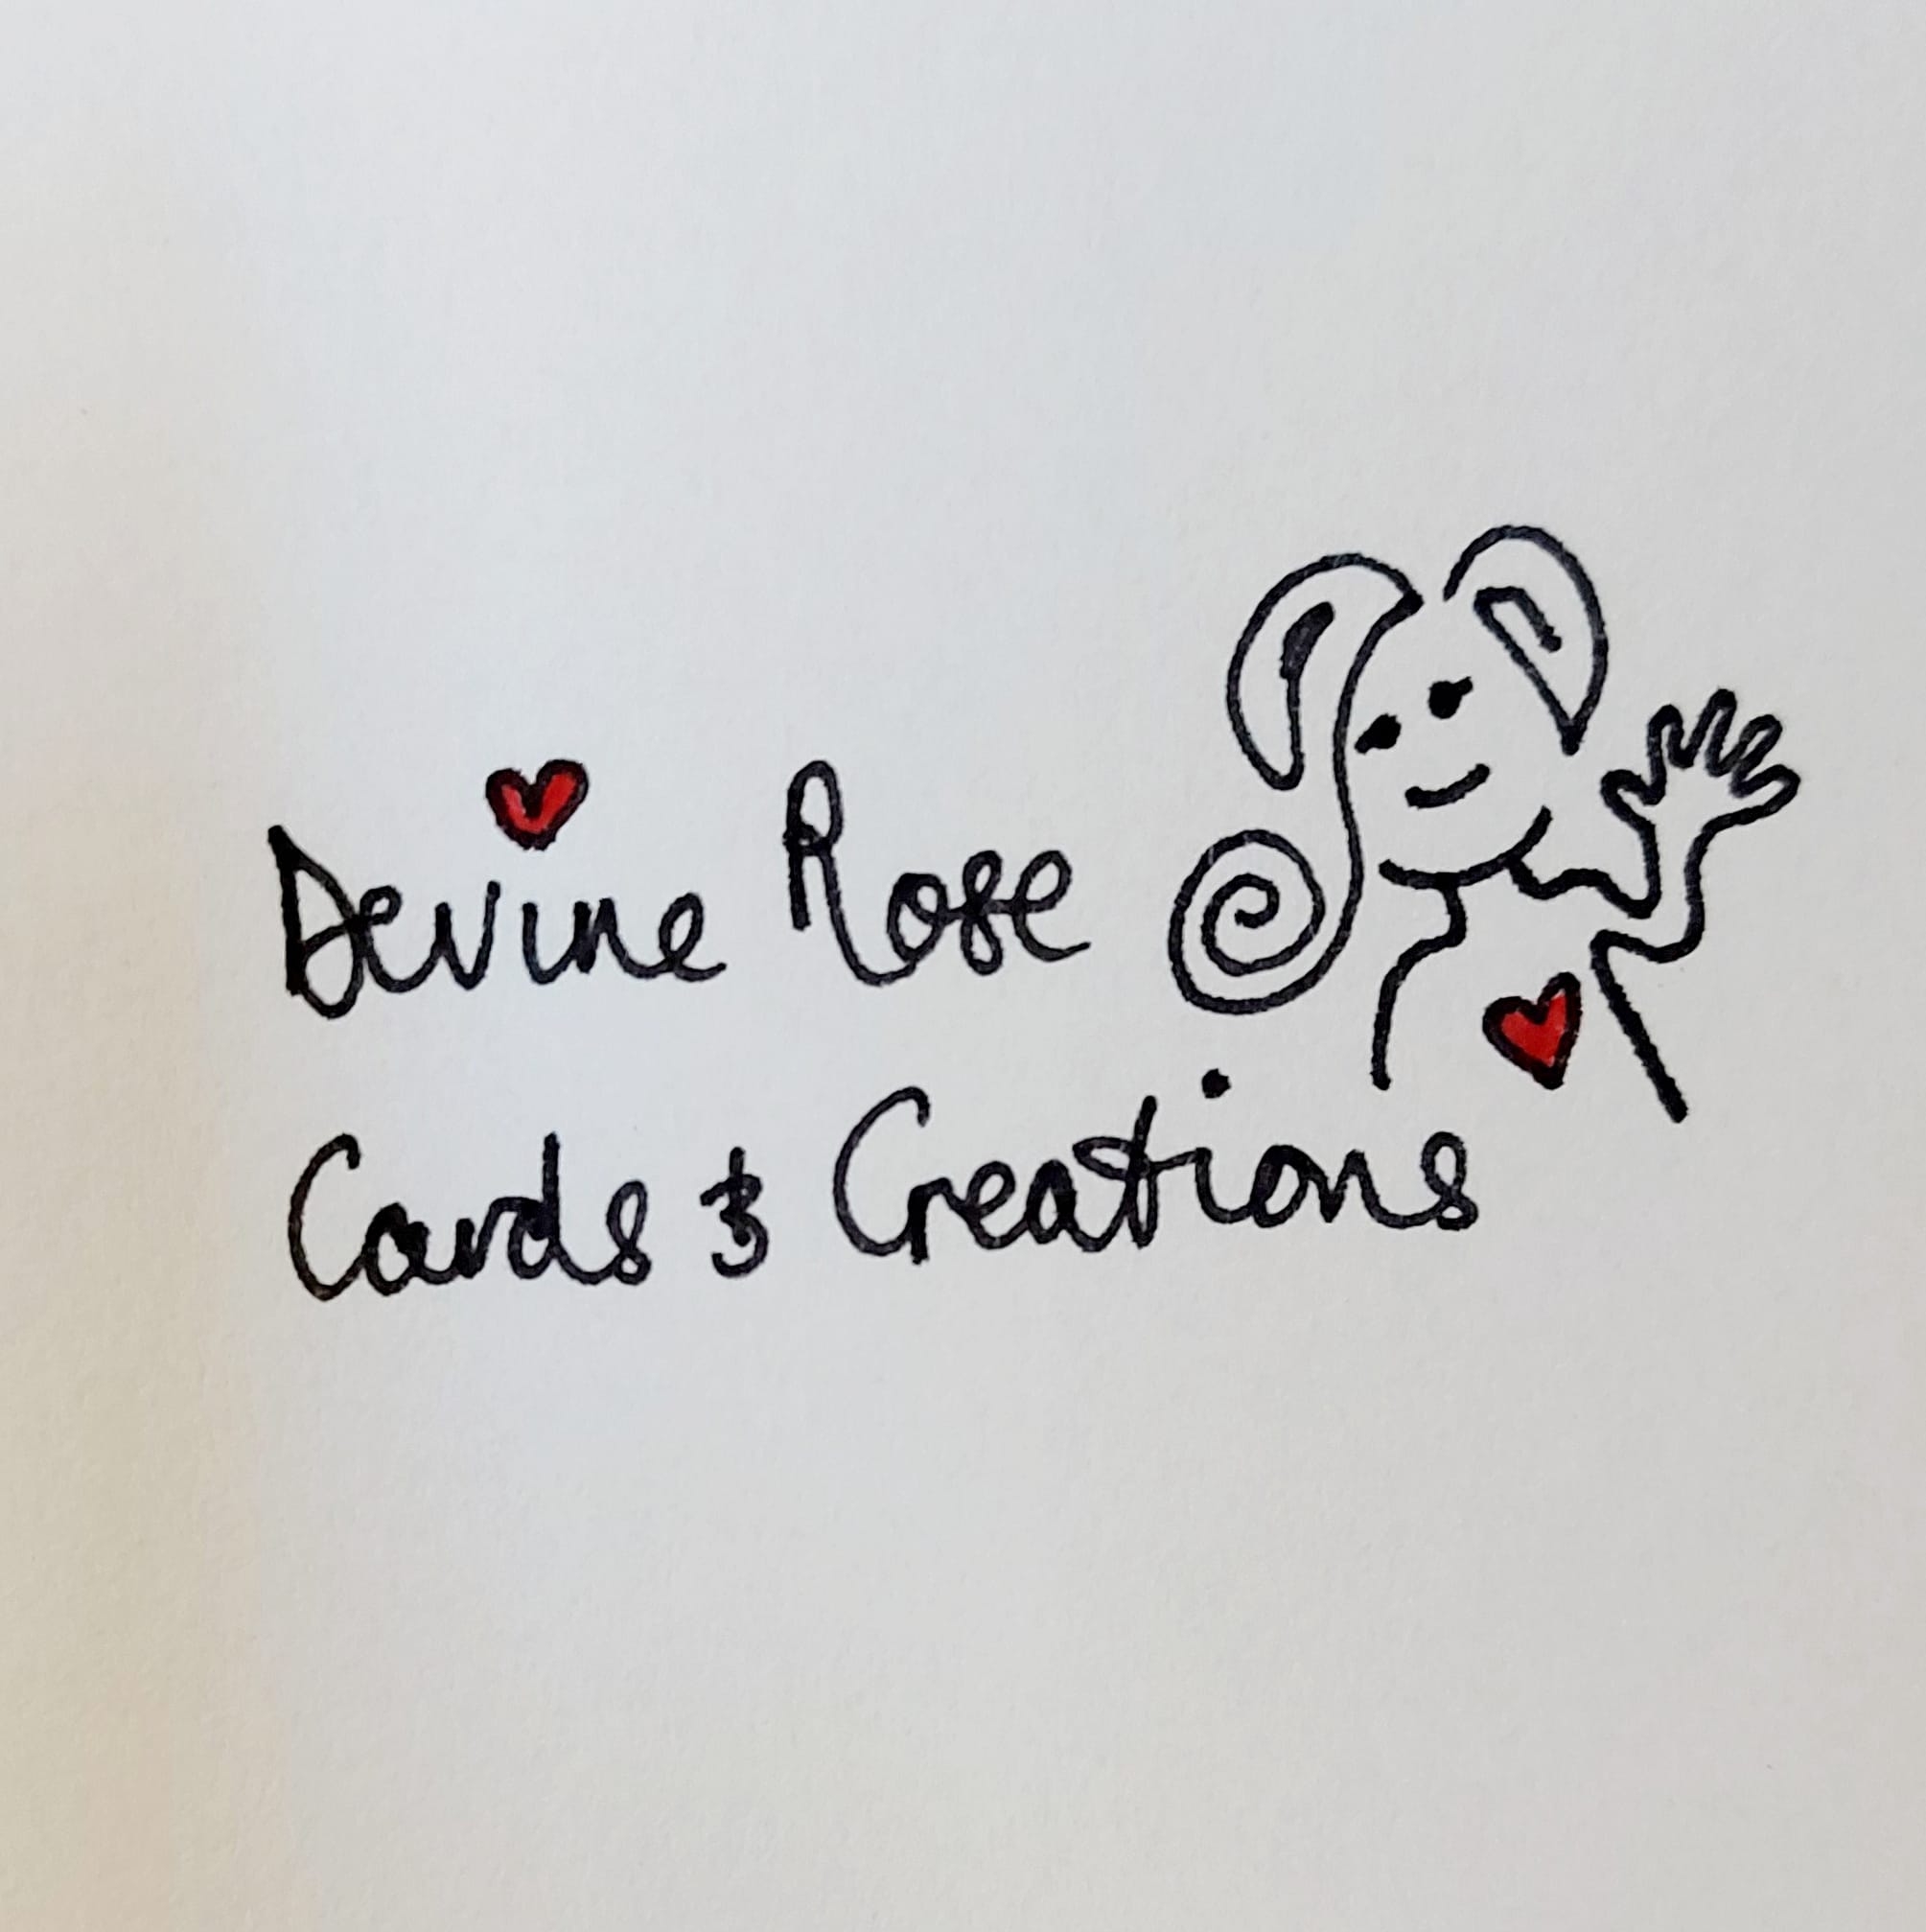 Devine Rose Cards & Creations logo